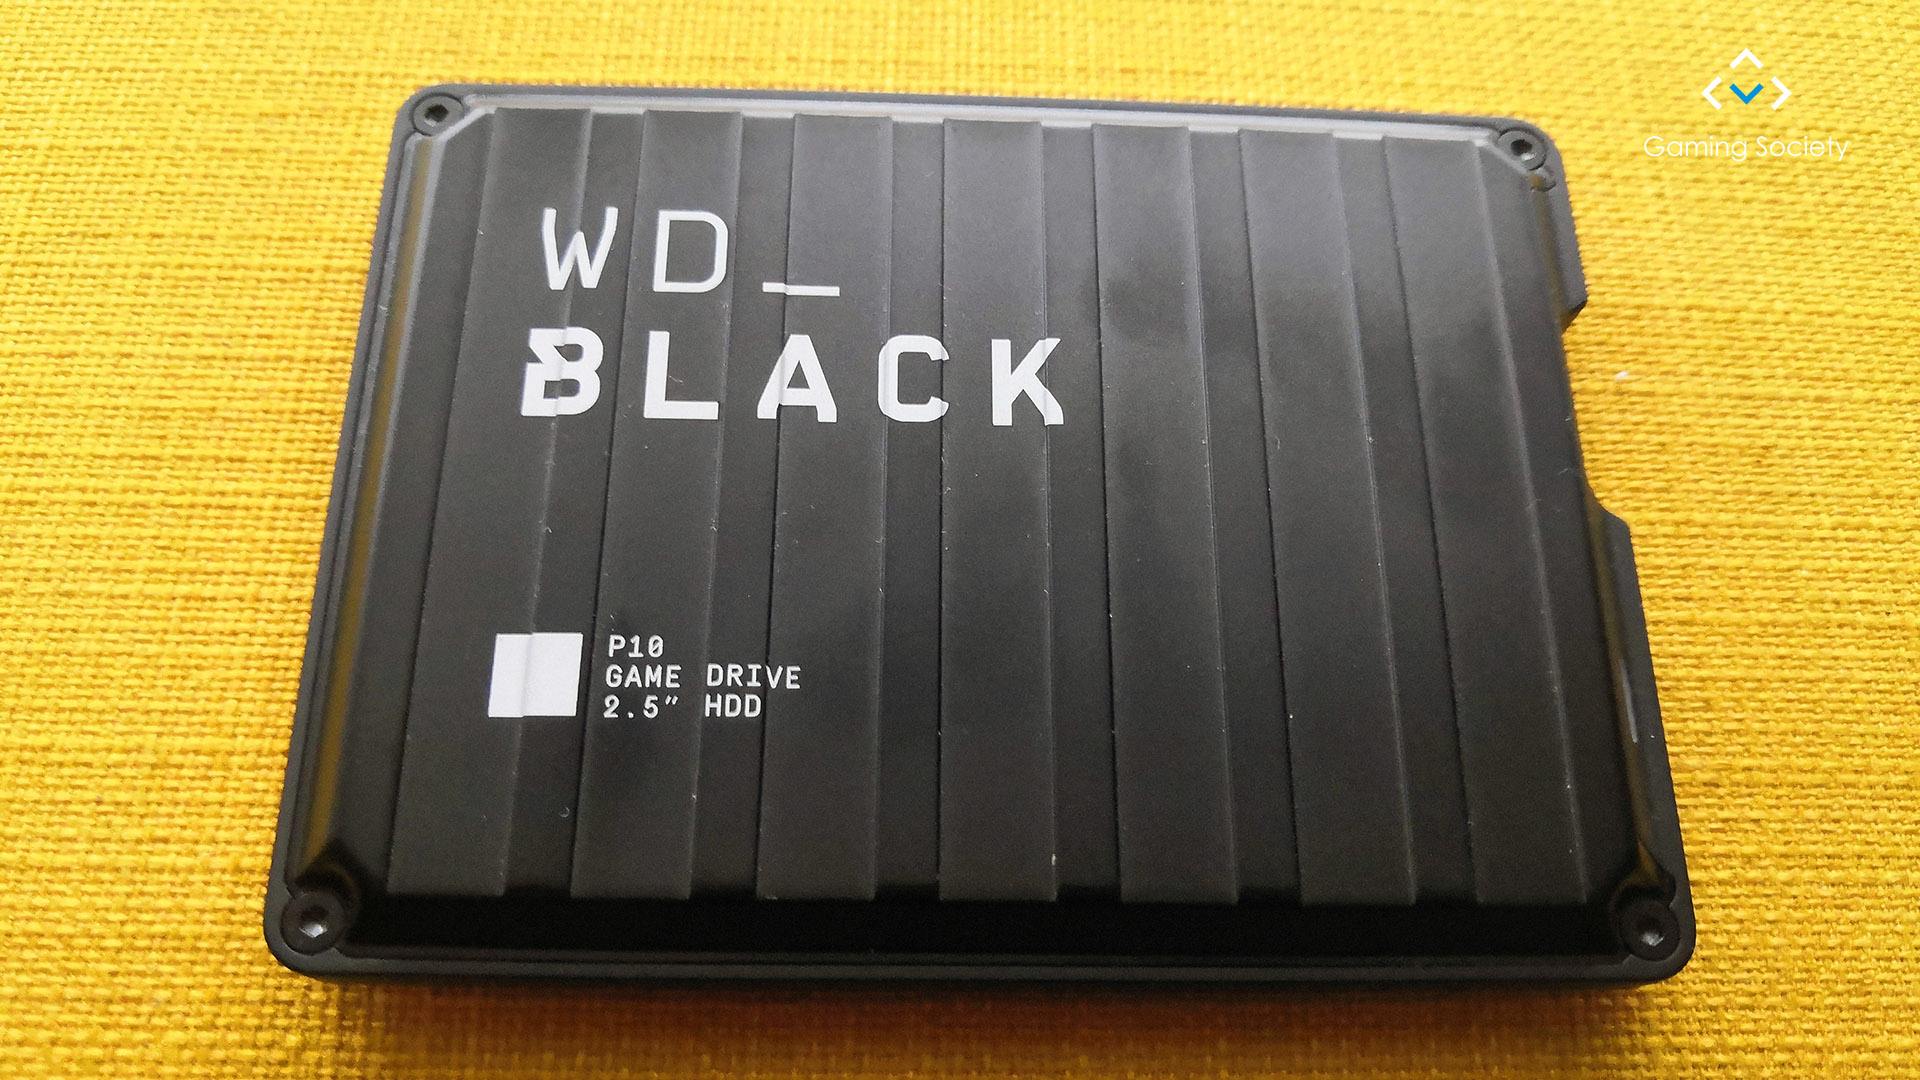 WD Black Game Drive P20